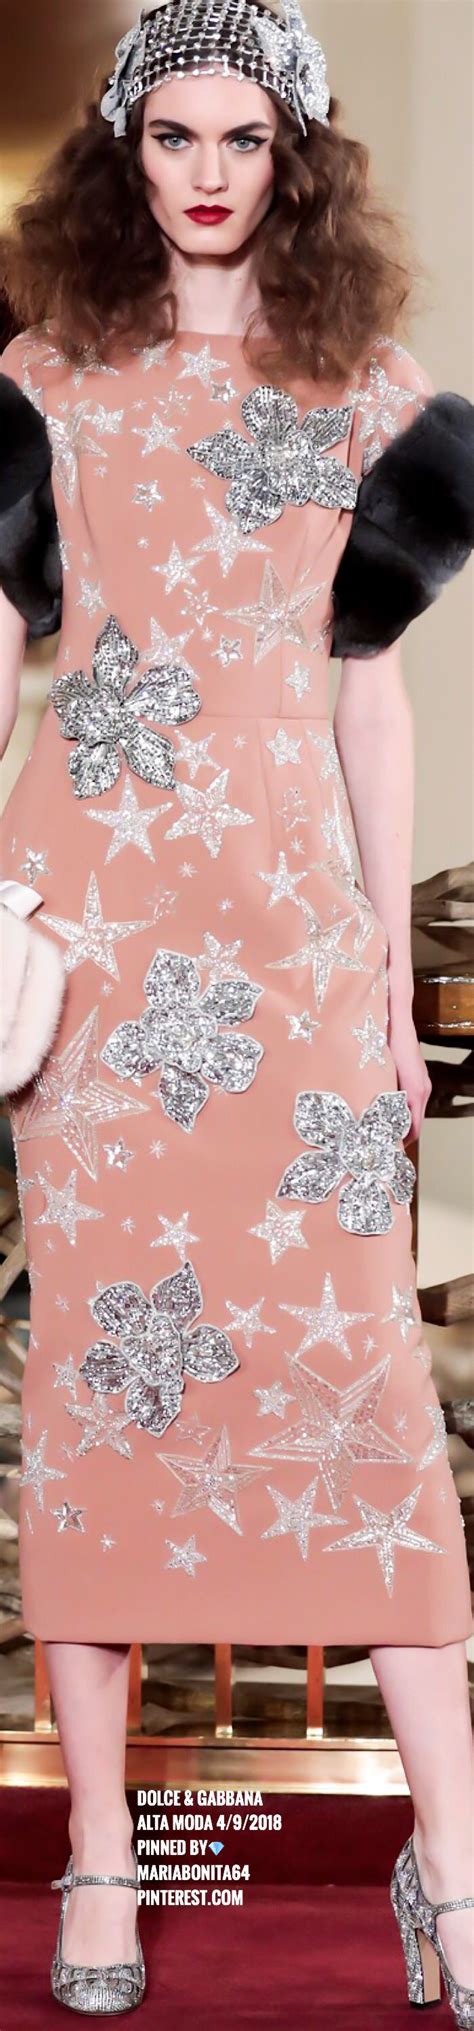 Dolce & Gabbana Alta Moda Show April 2018 | Damen mode, Exklusive mode, Women's dresses